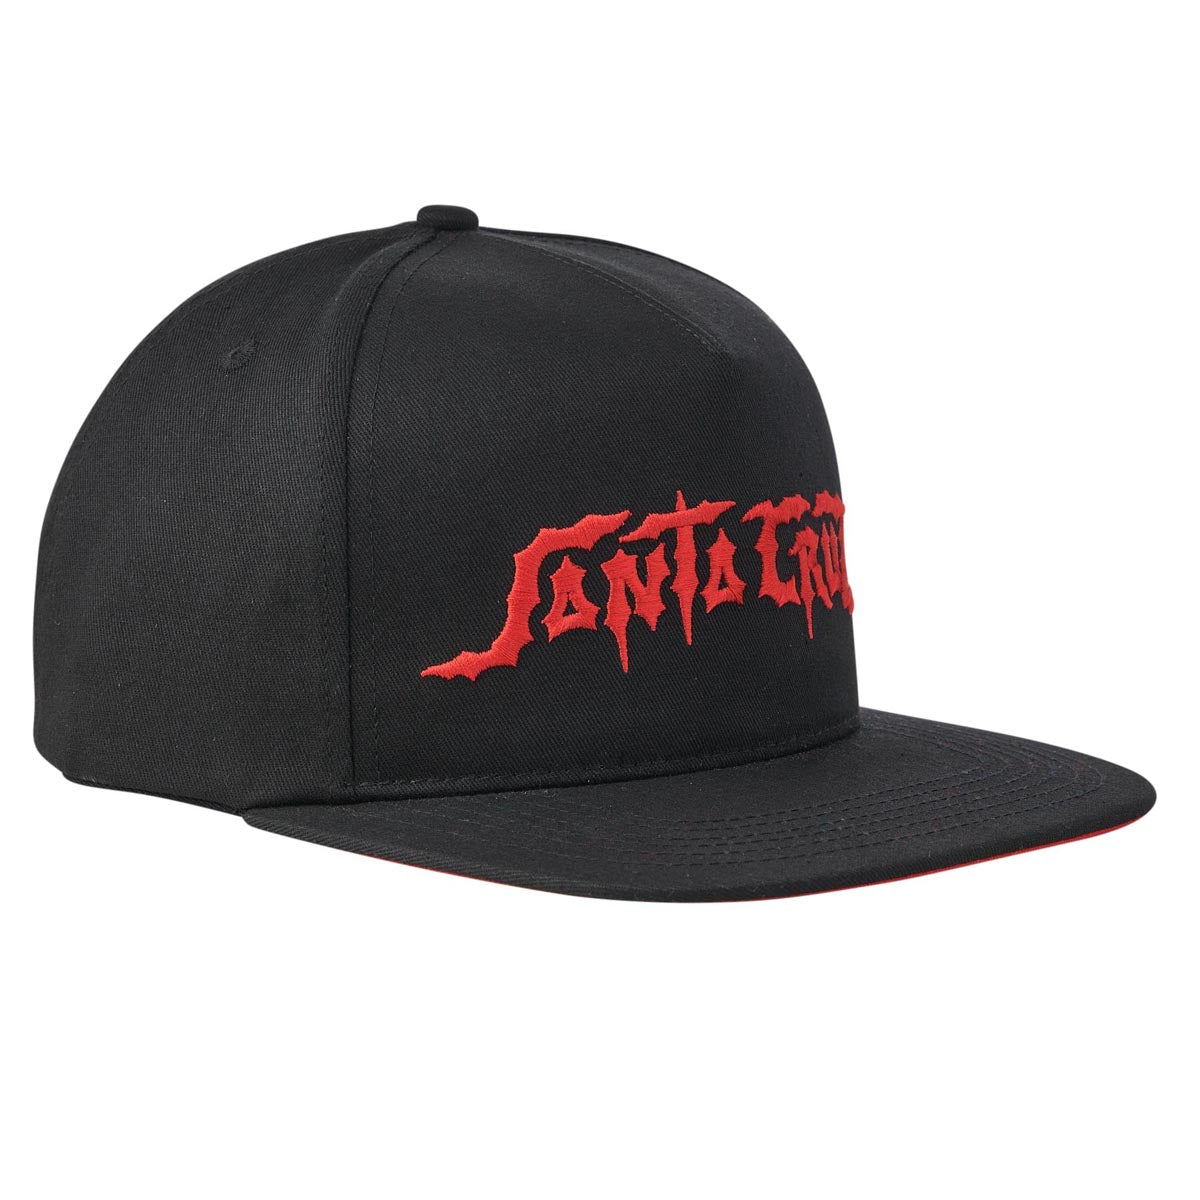 Santa Cruz Dungeon Strip Snapback Hat - Black/Red image 2